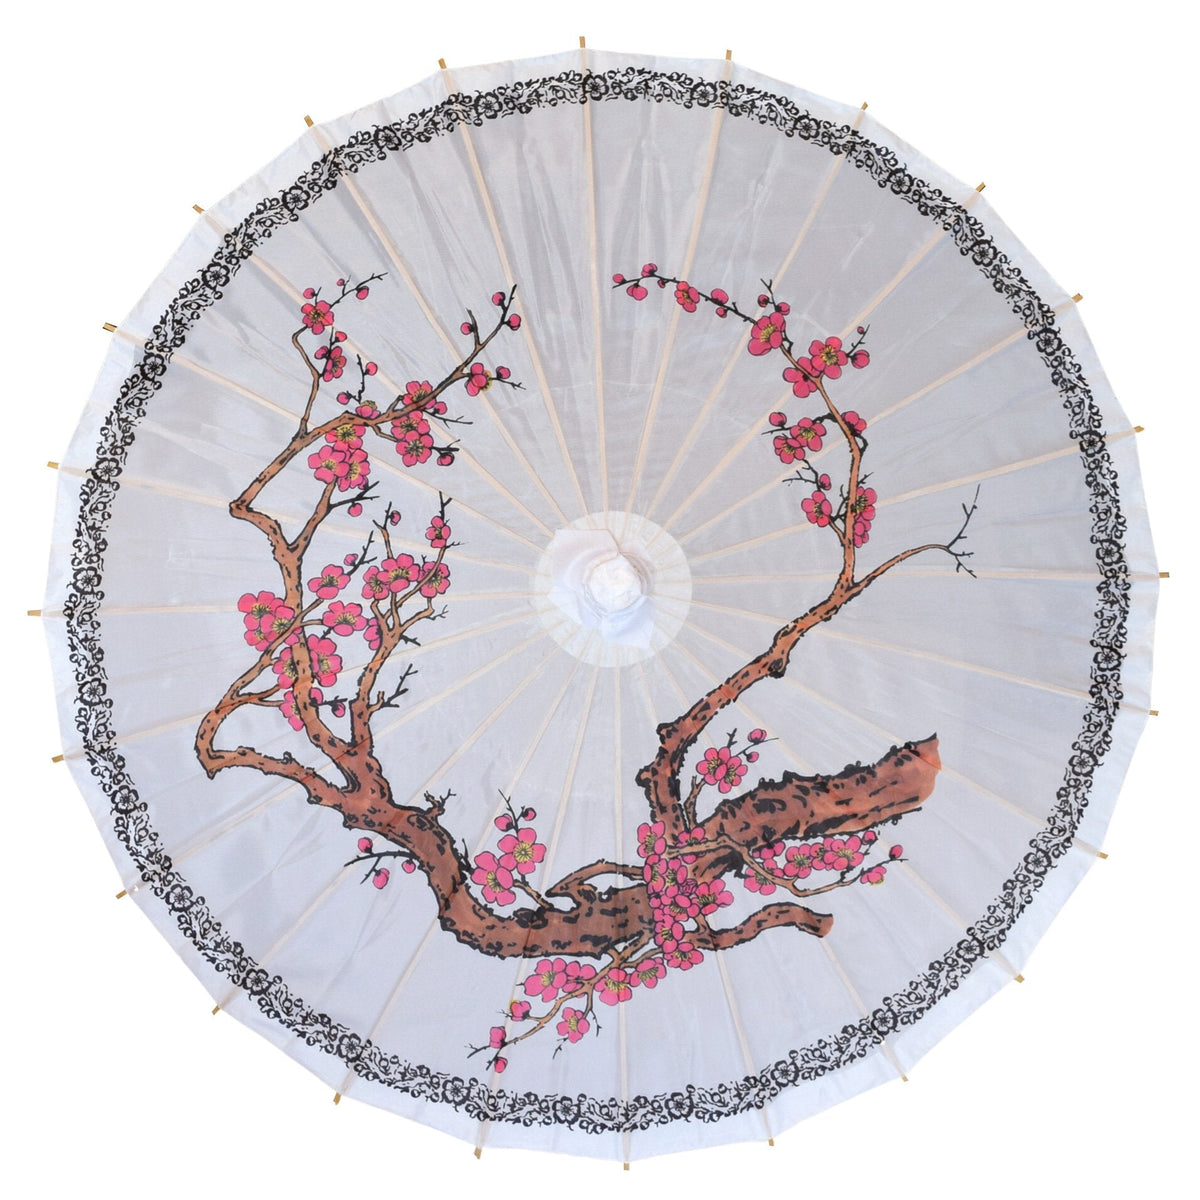 32 Inch Cherry Blossom with Floral Ring Premium Nylon Parasol Umbrella with Elegant Handle